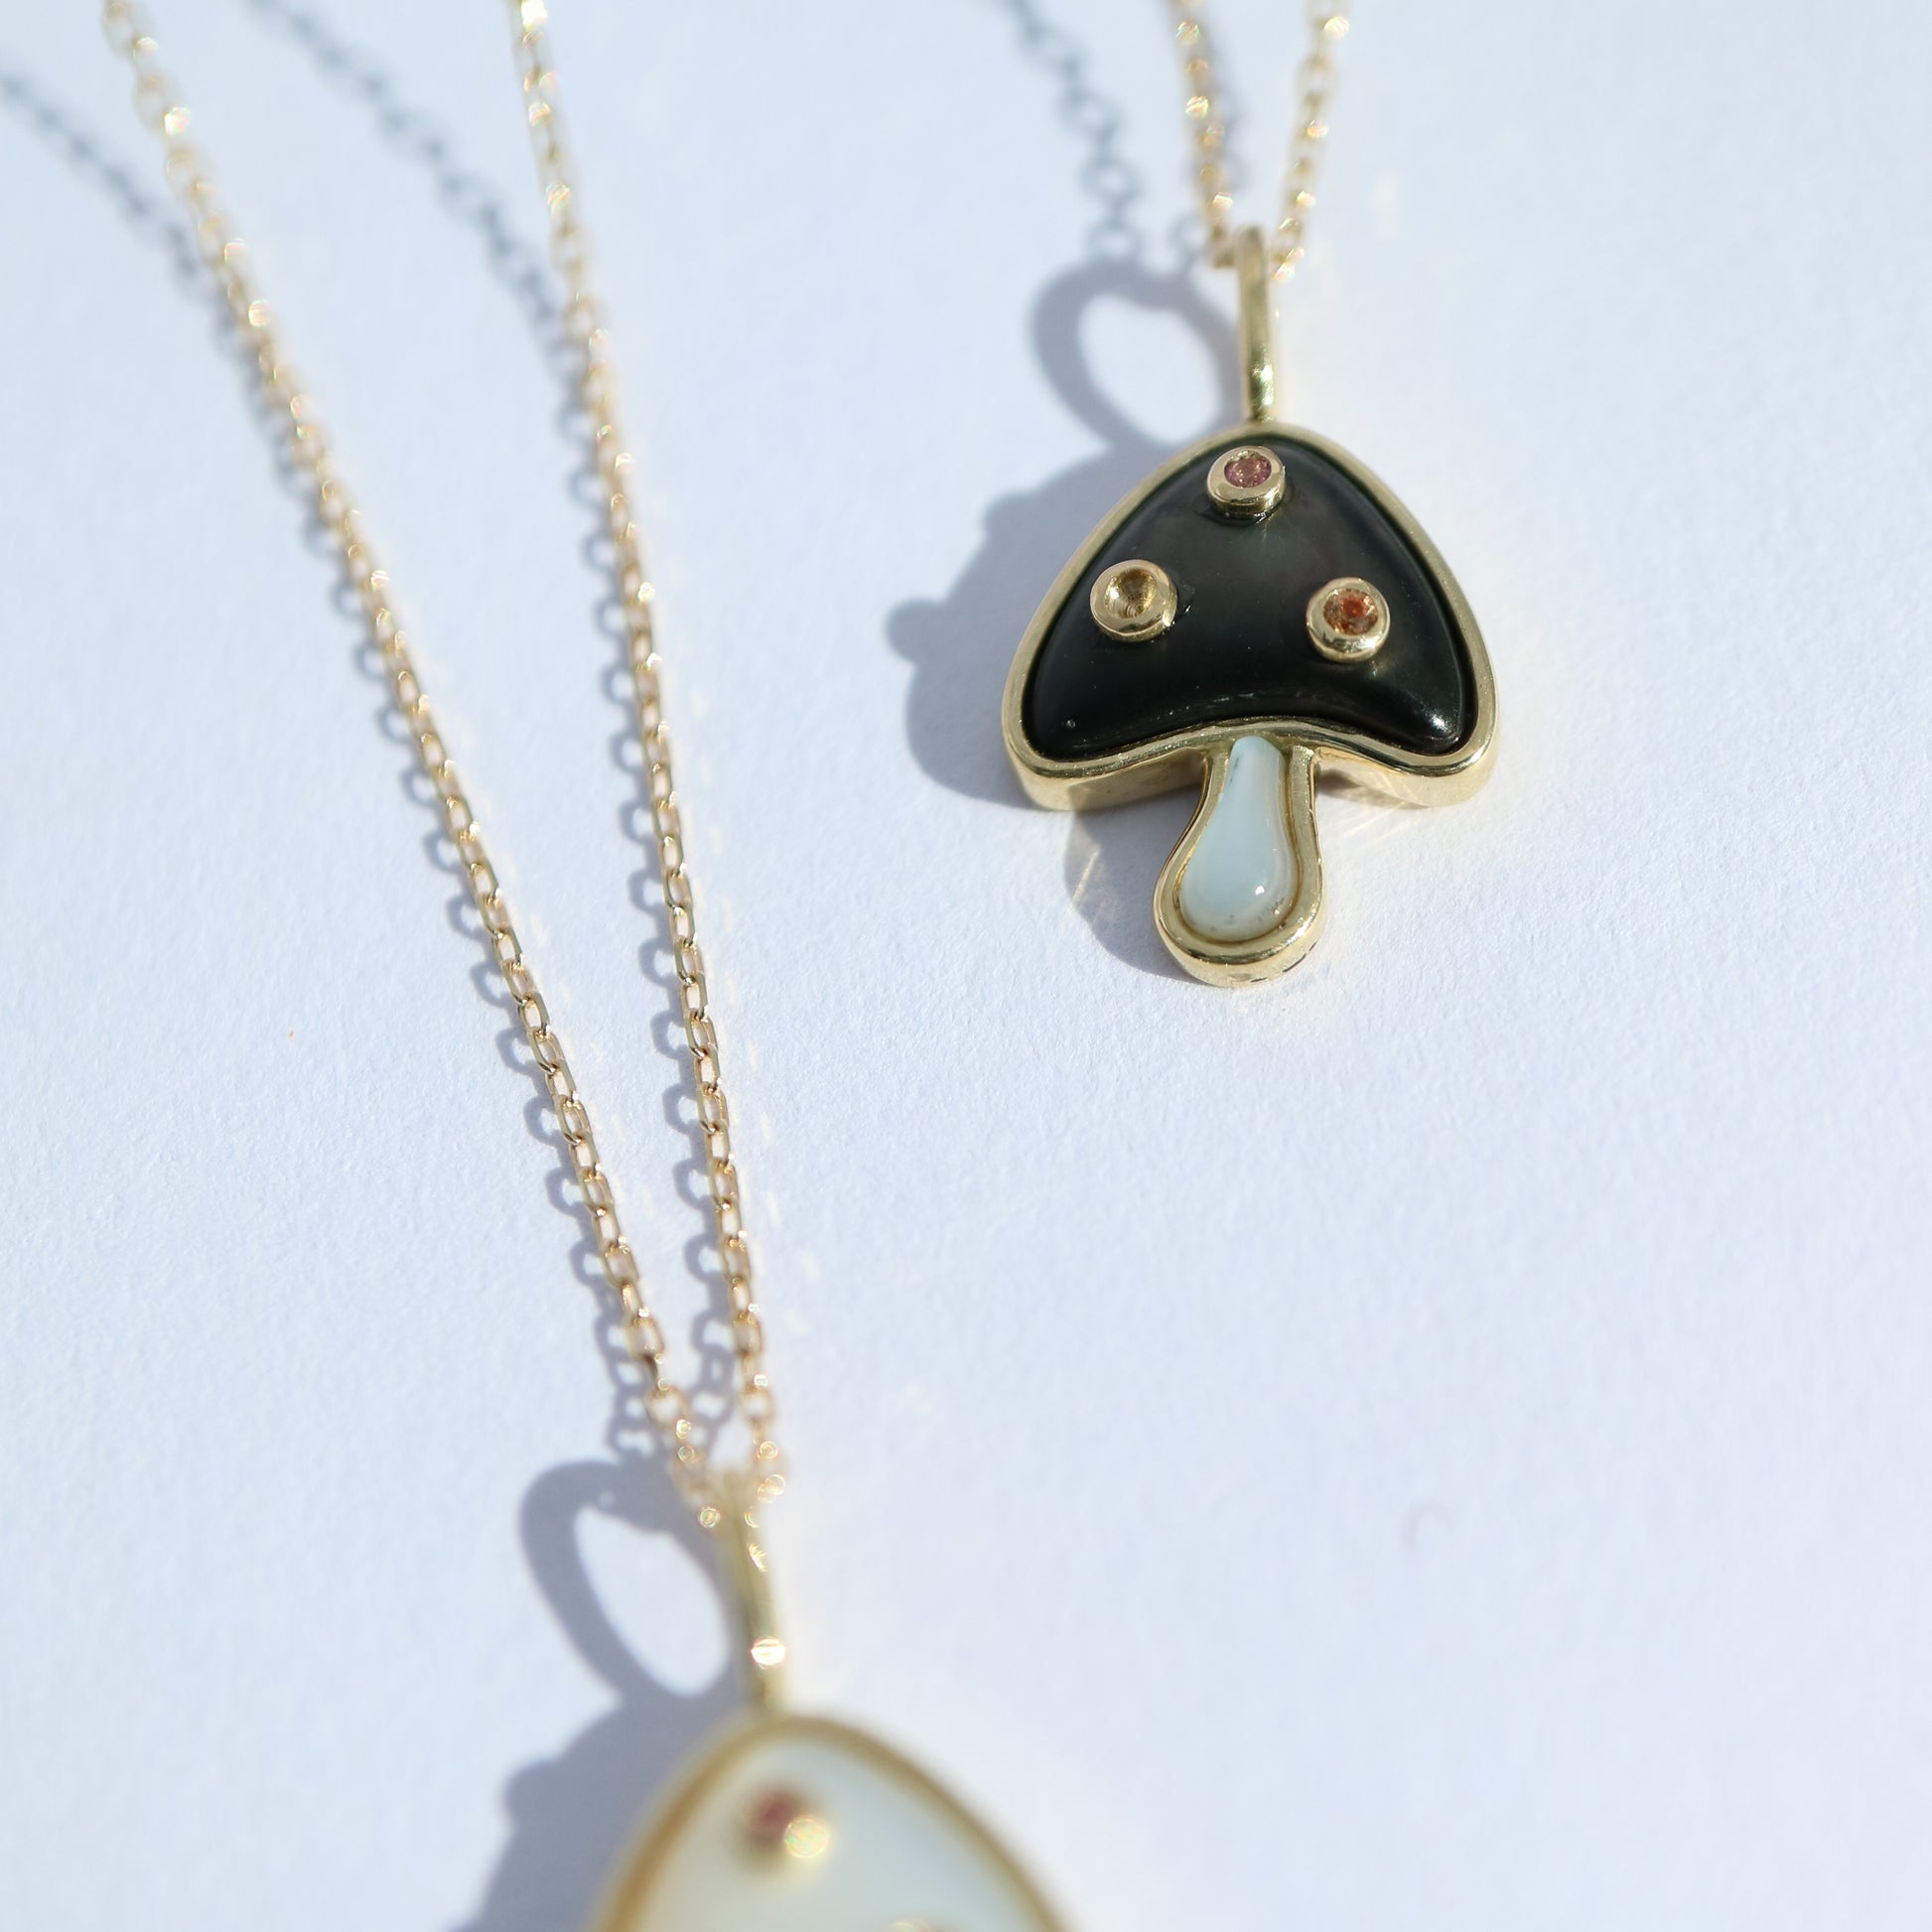 9kt gold, mother-of-pearl, sapphire and aquamarine mushroom pendants